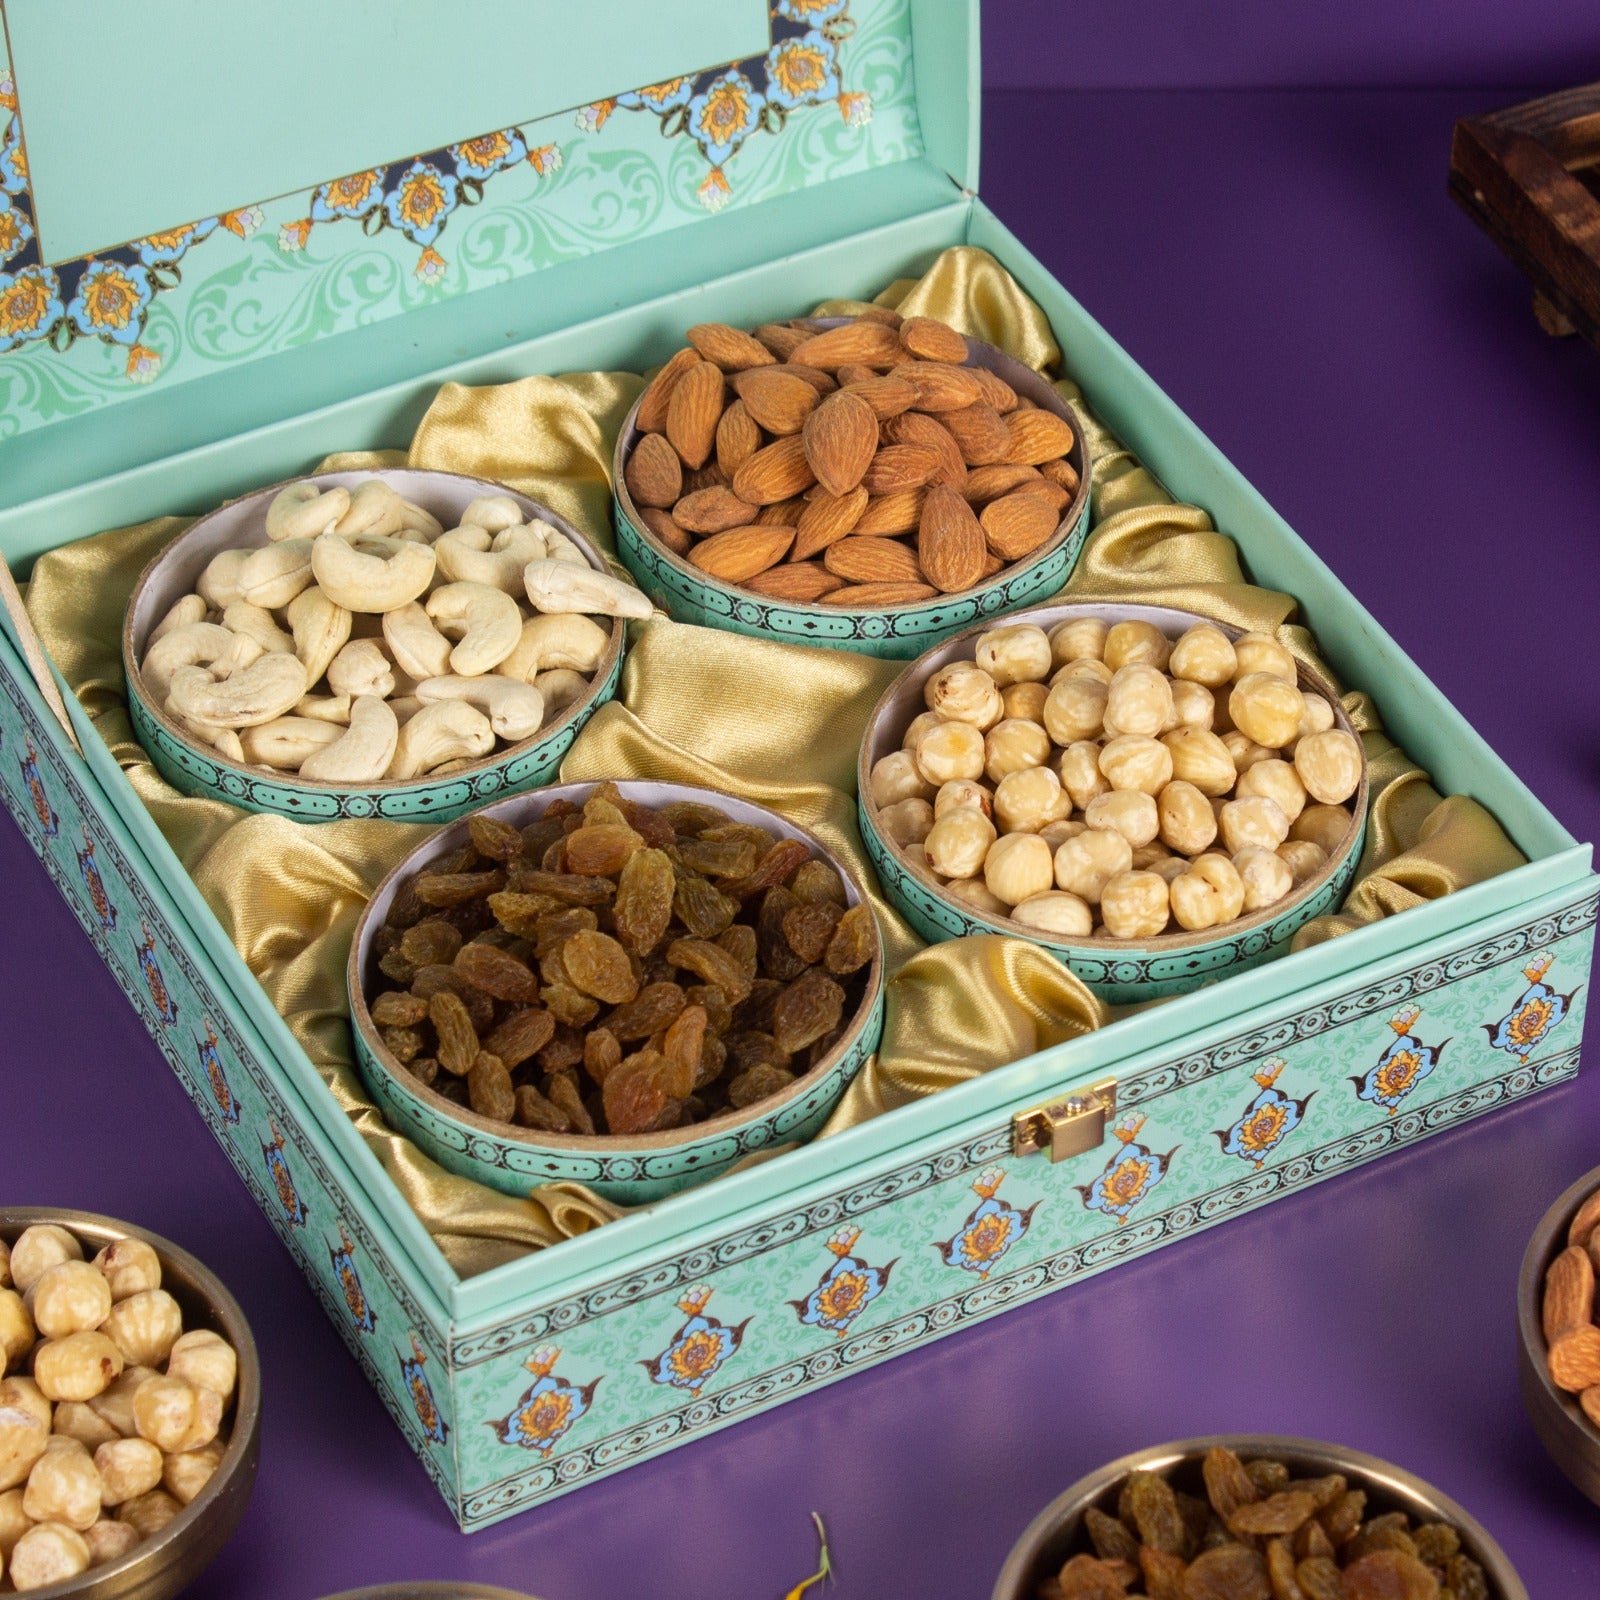 Gourmet Nut and Raisin Box - American Almonds, Cashews, Hazelnuts, and Raisins